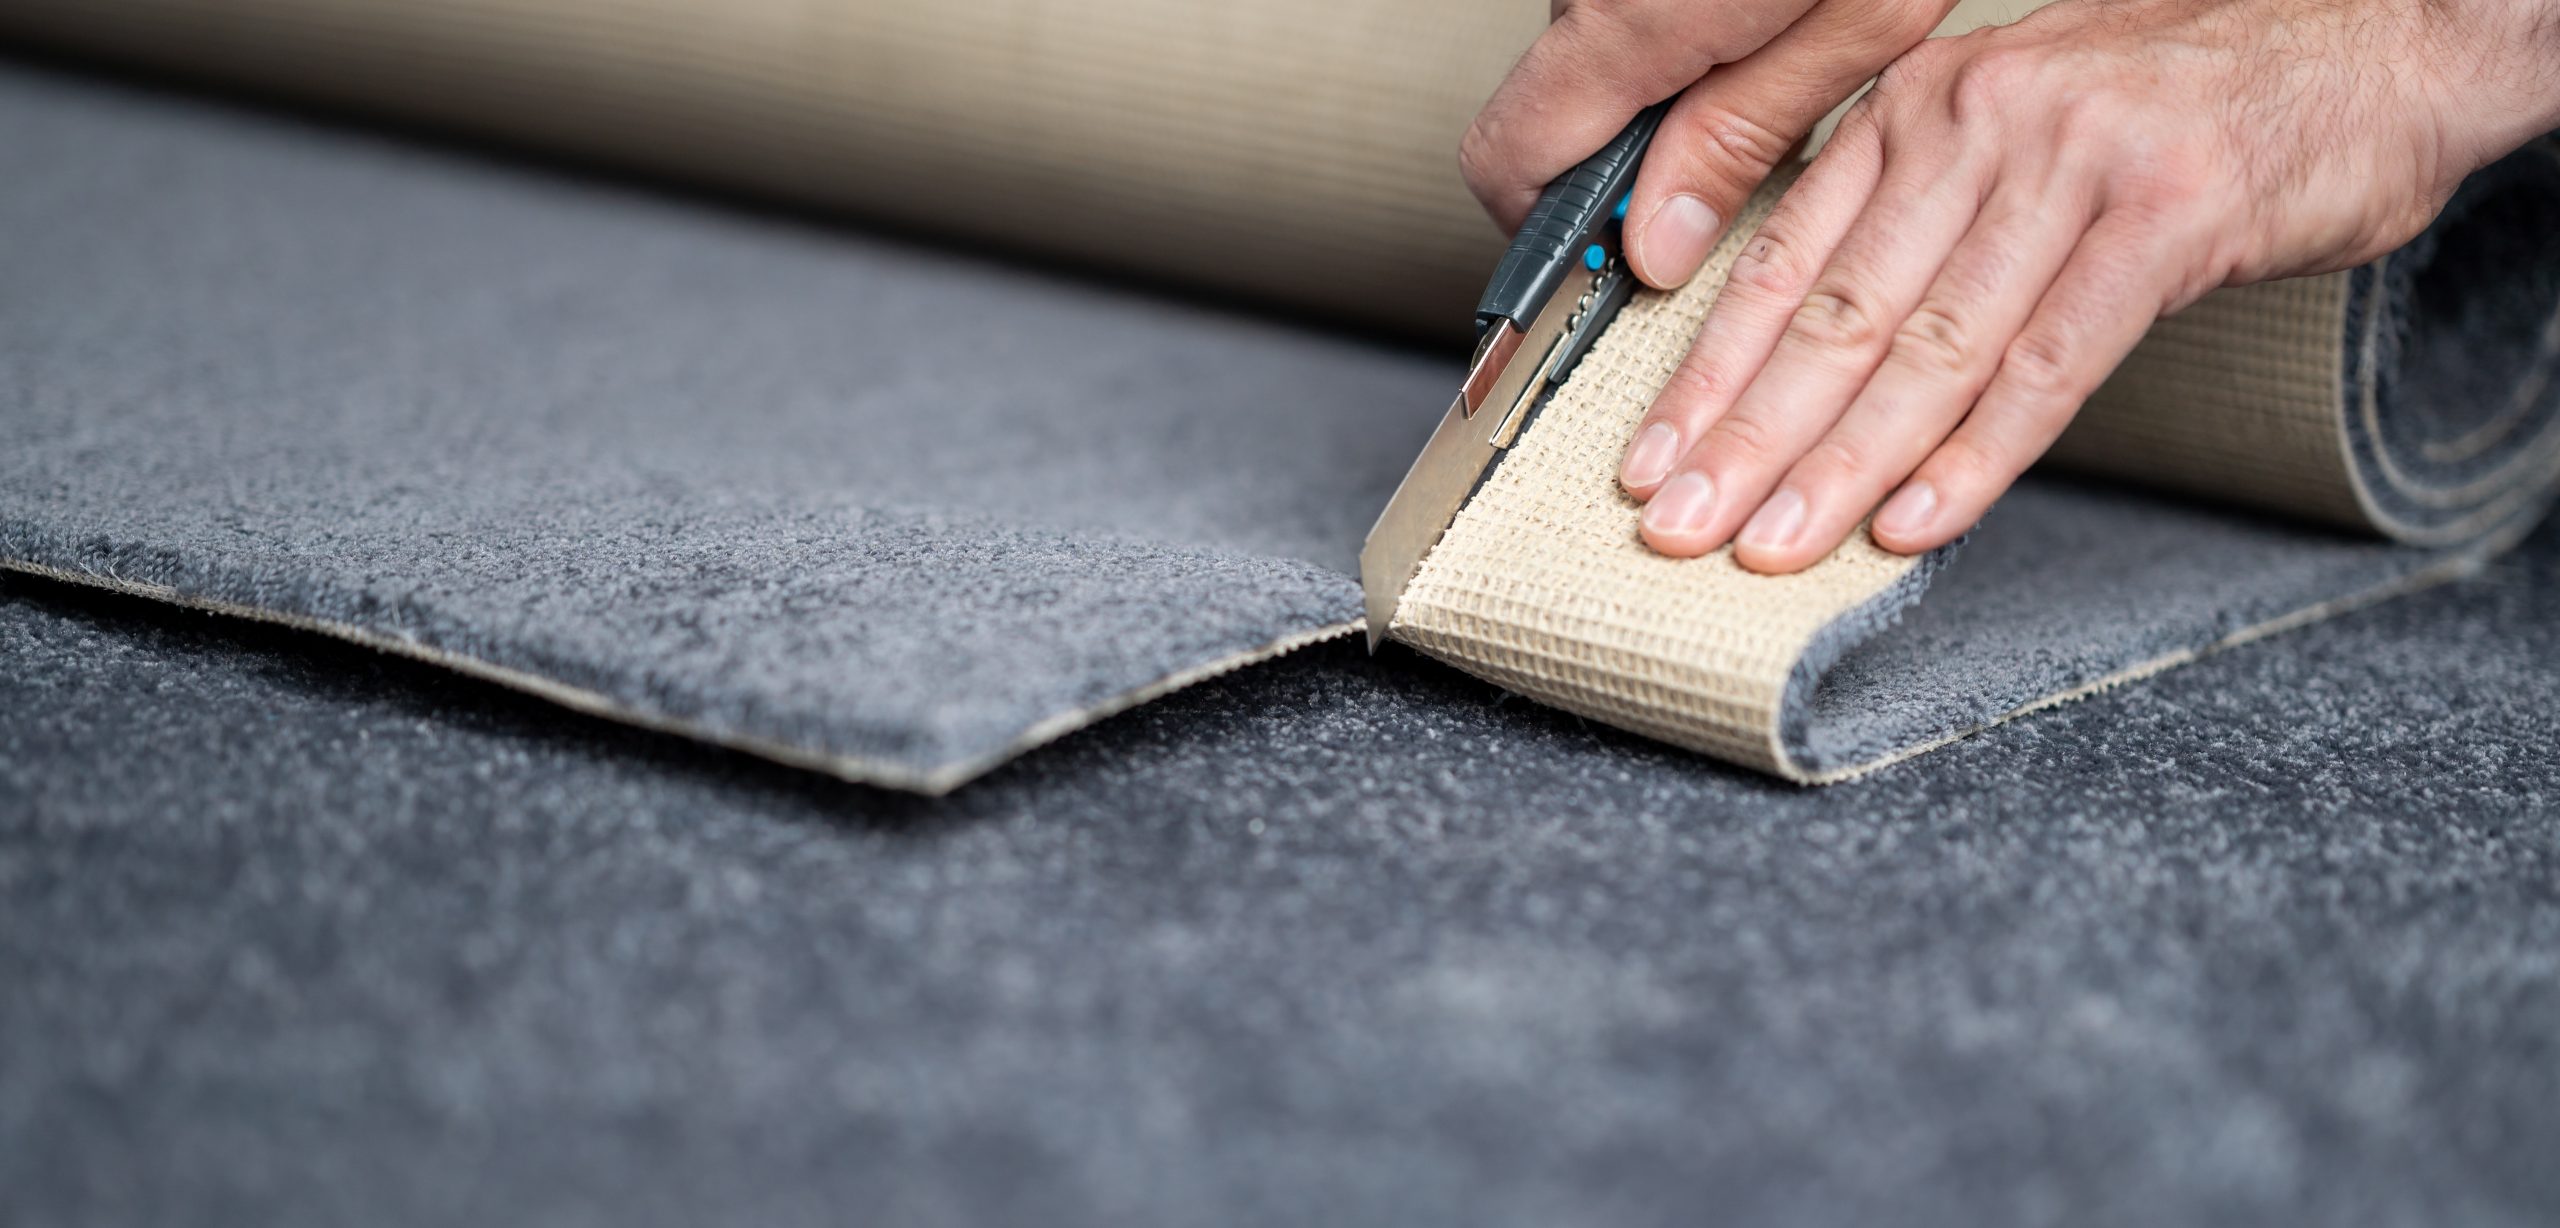 Choosing The Best Carpet Underlay